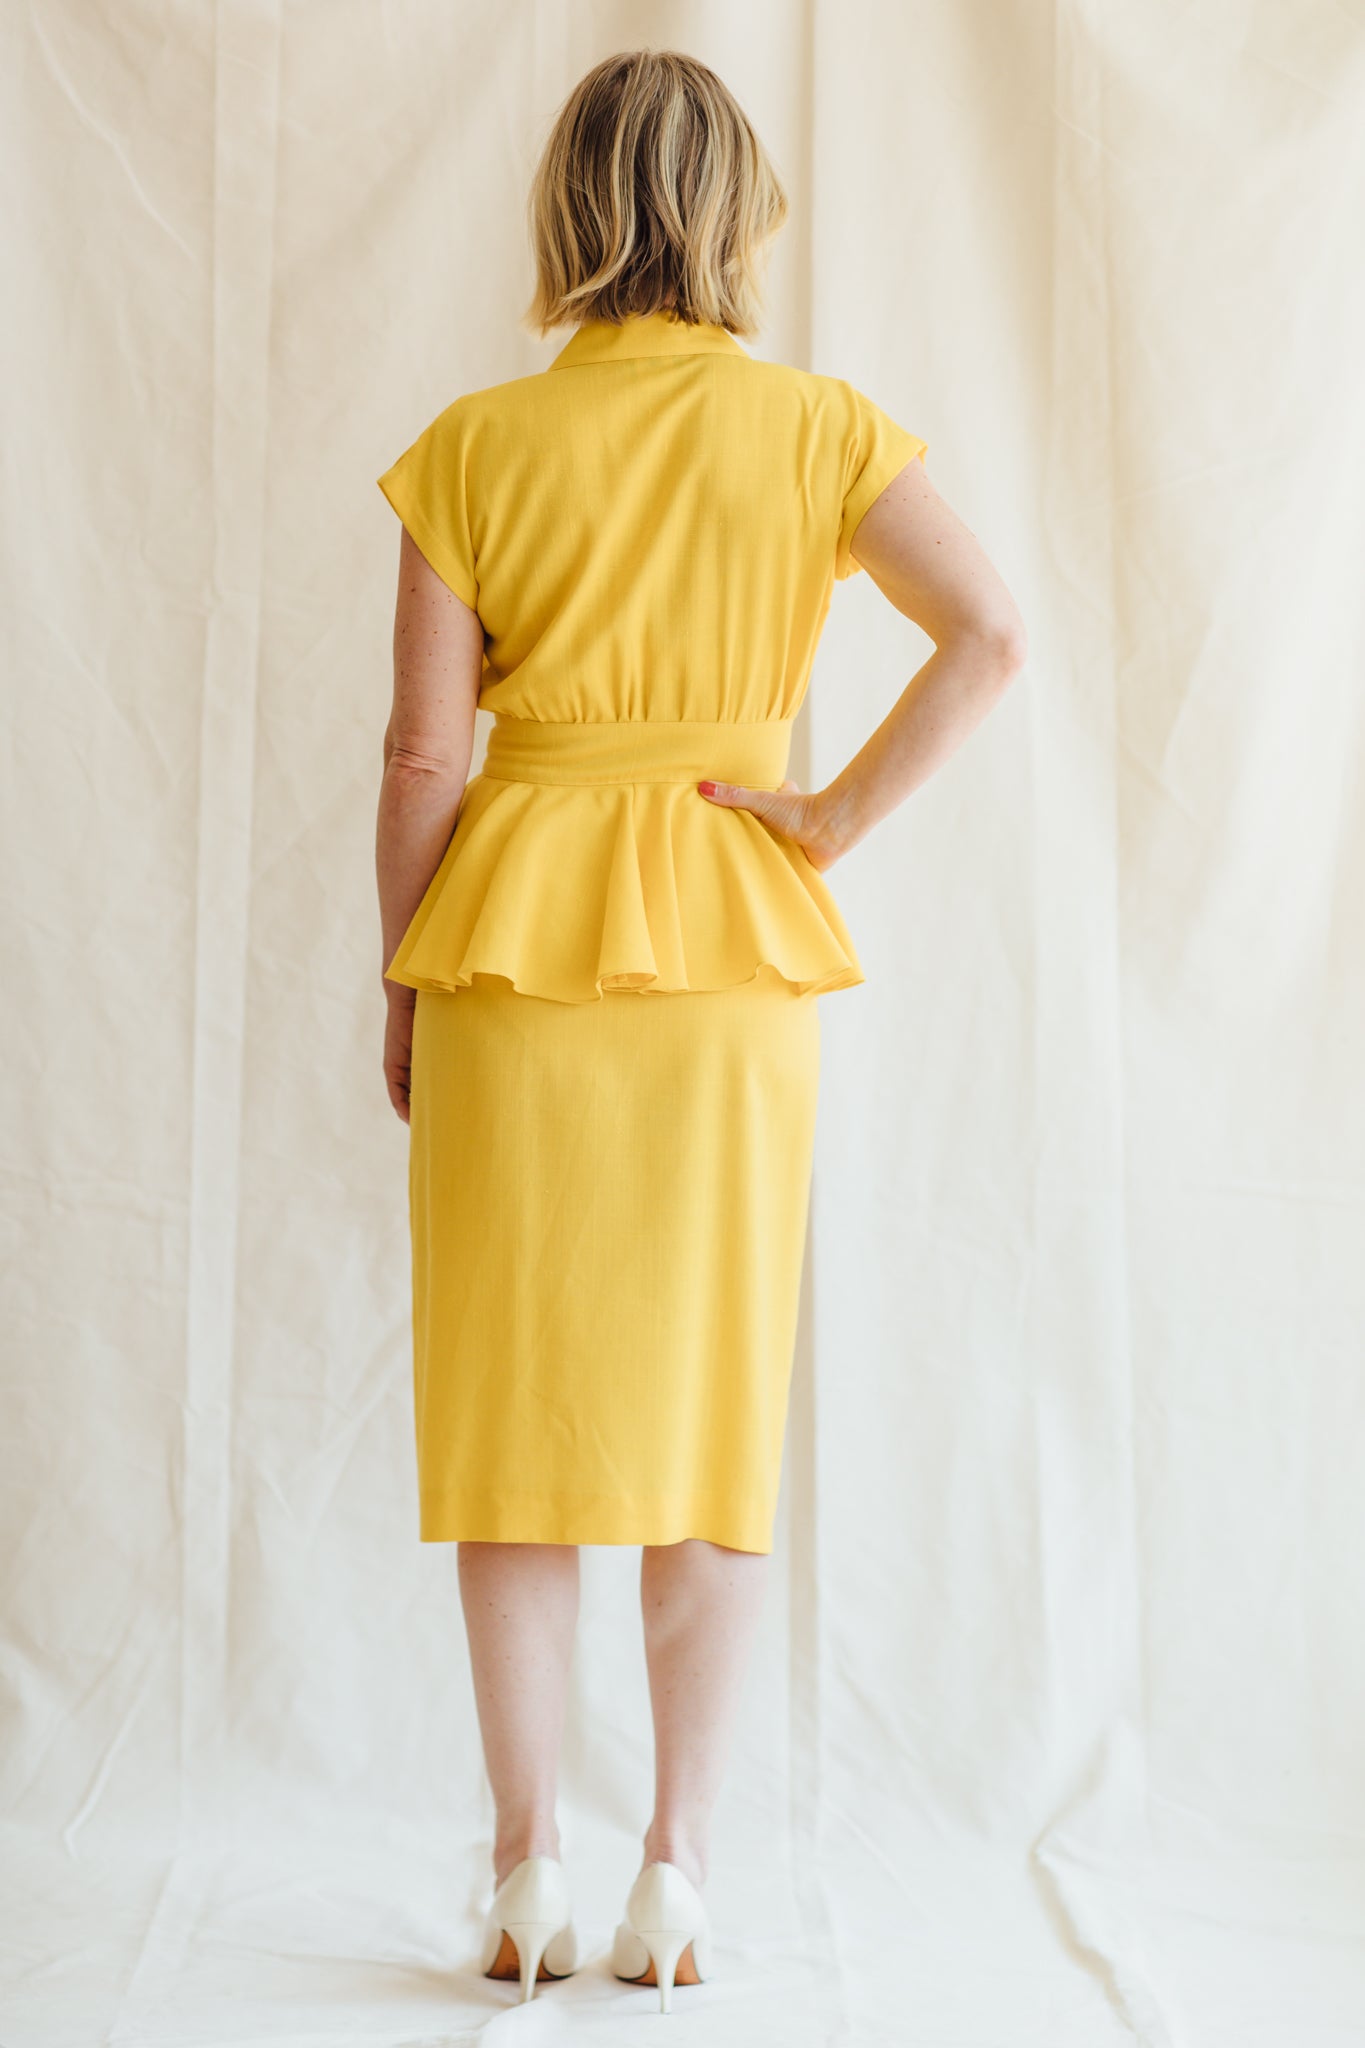 Toni Todd Yellow Peplum Dress